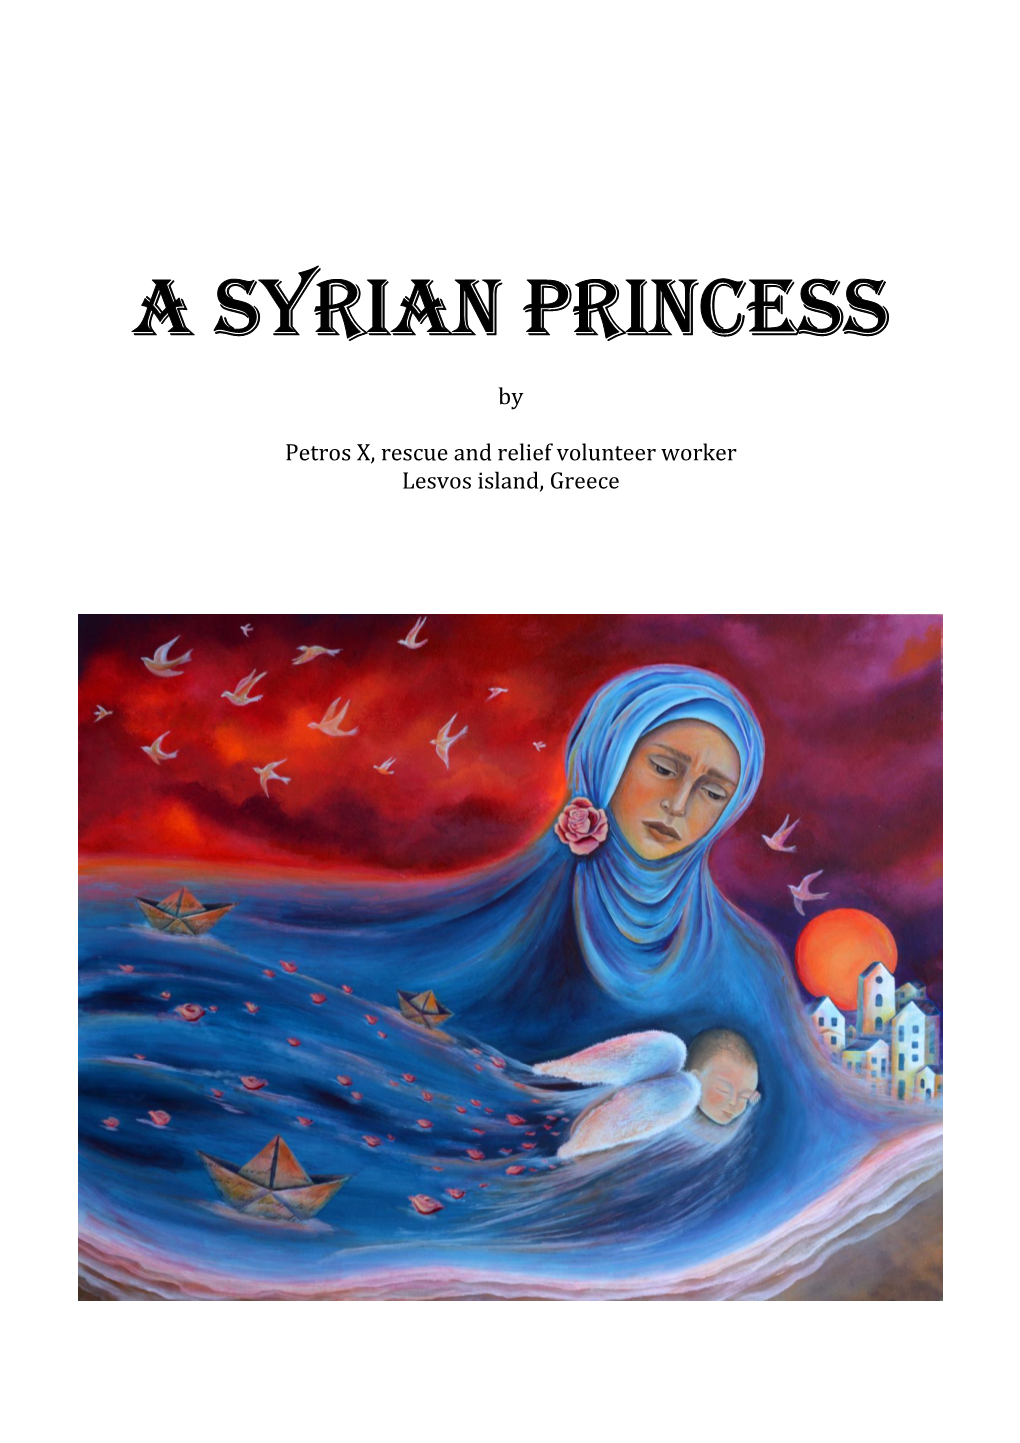 A Syrian Princess